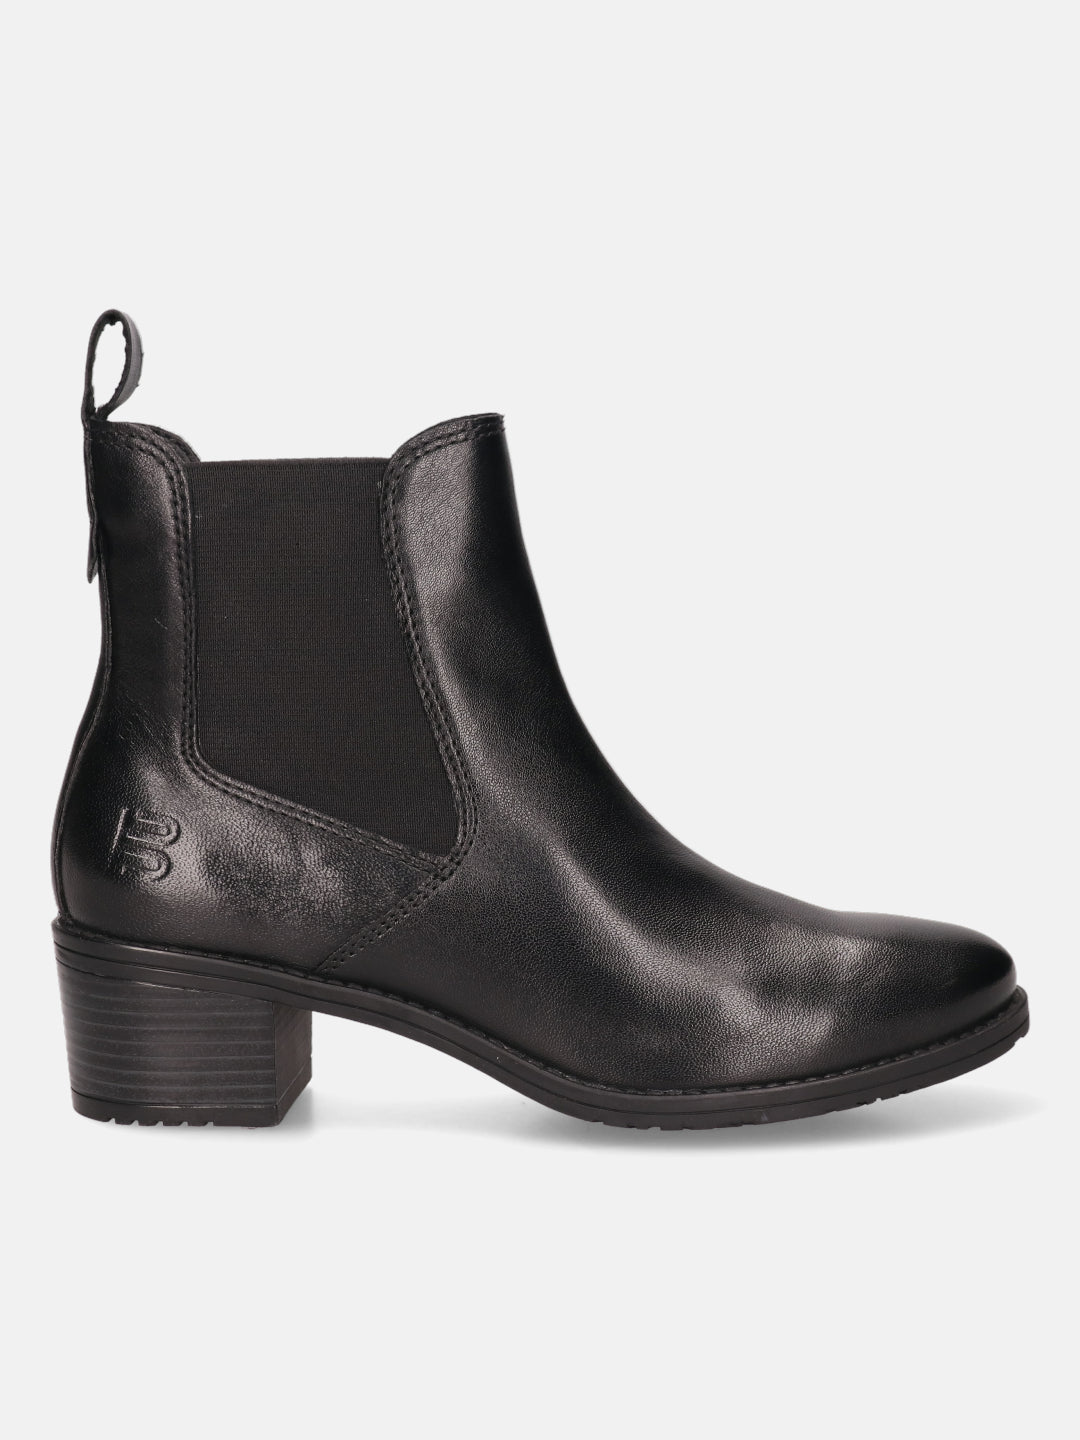 BAGATT Premium Leather Black Chelsea Boots